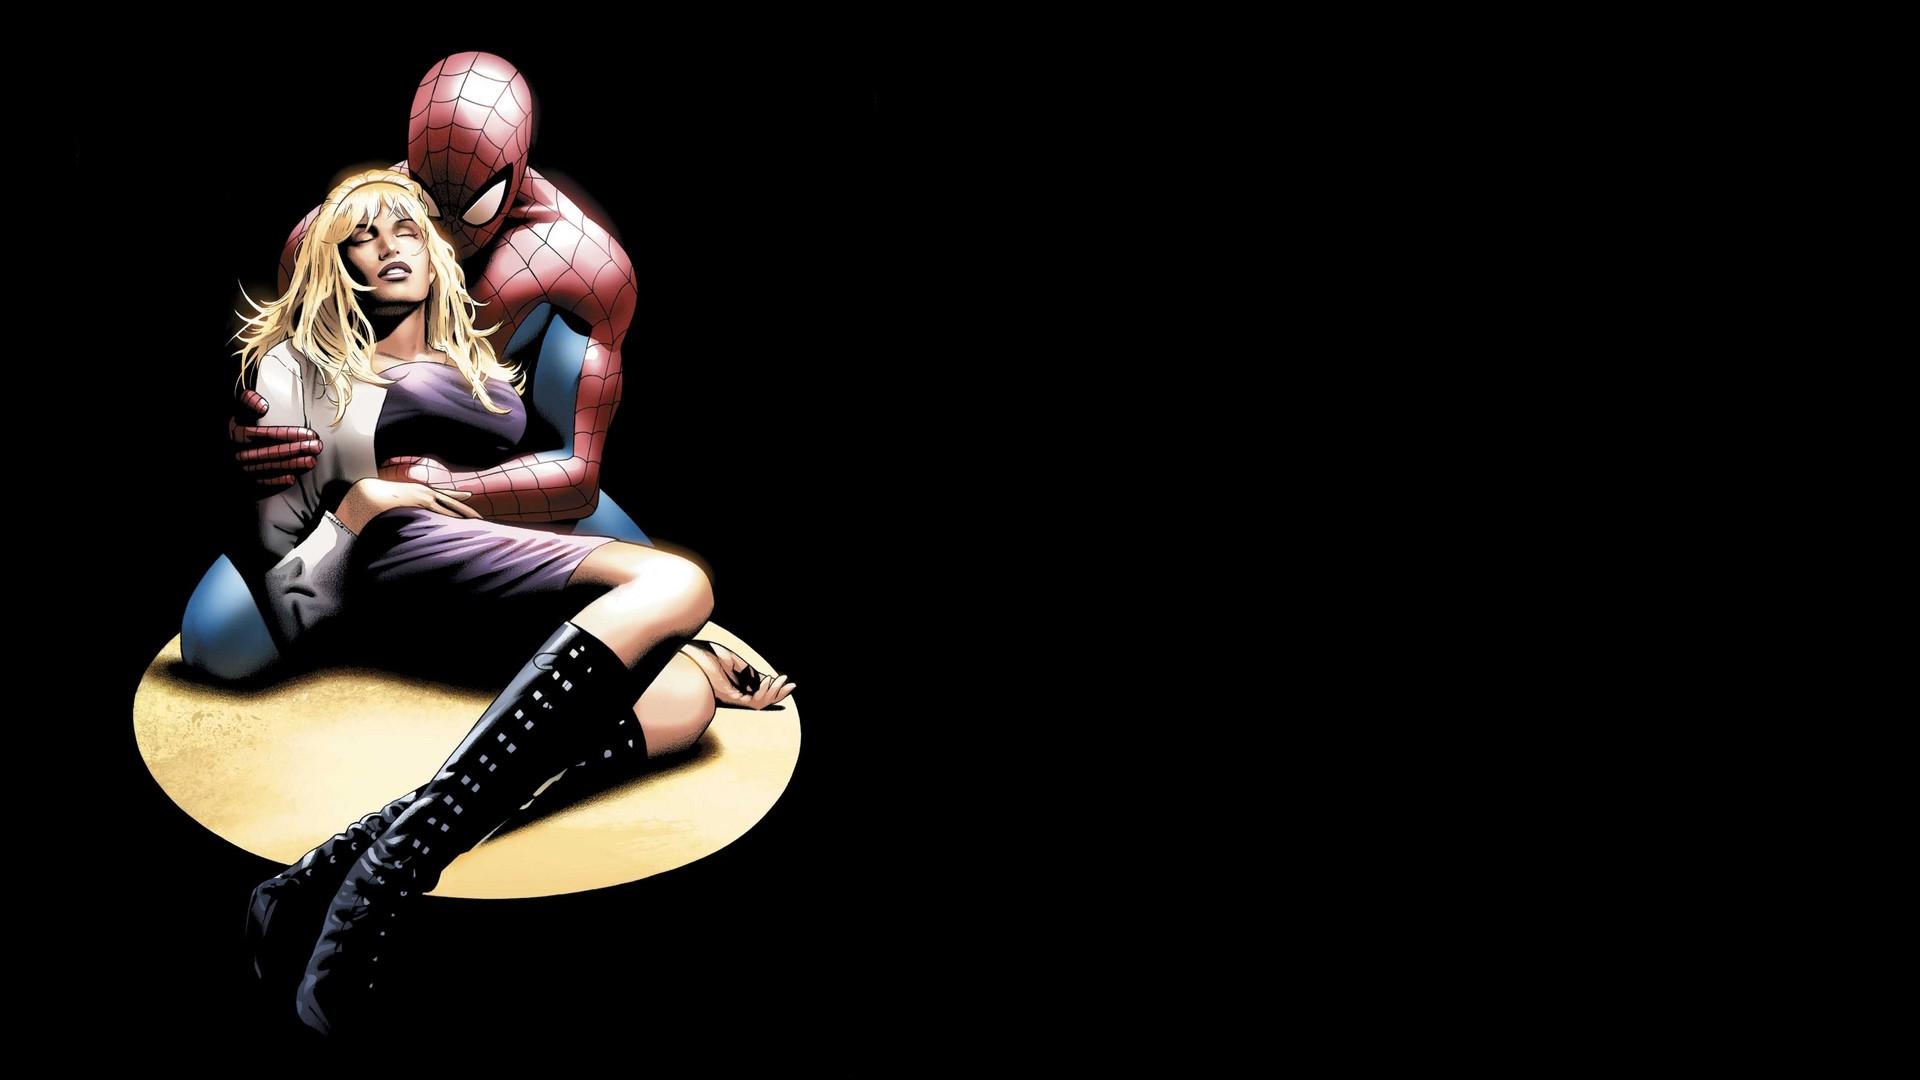 Spiderman Comics Spider-man Superhero with women Wallpaper